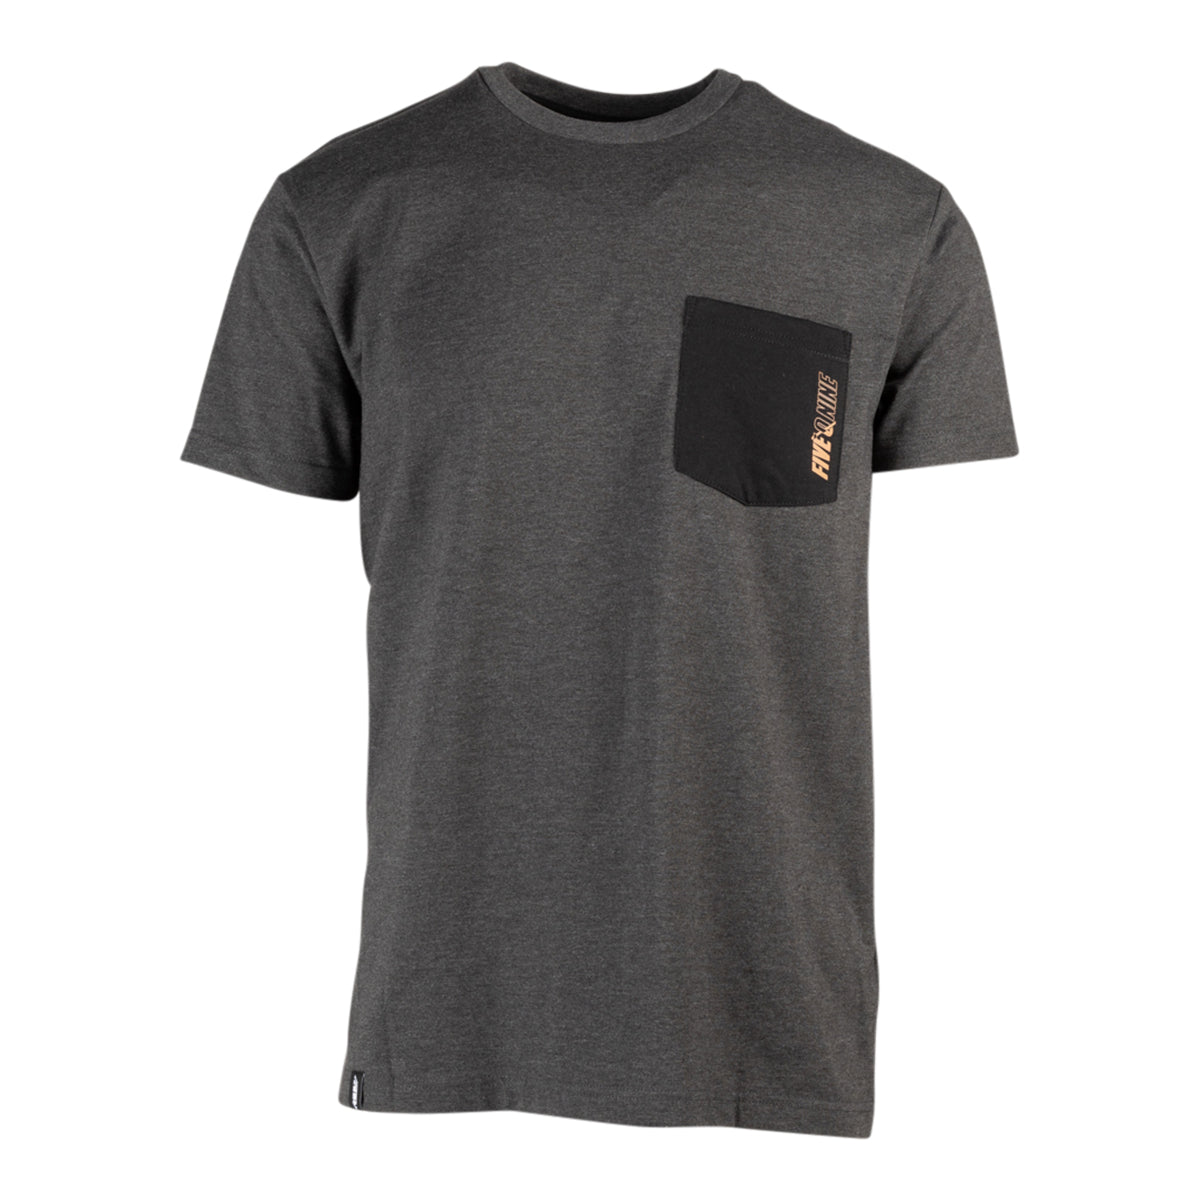 509 Arsenal Pocket T-Shirt F09001201-120-901